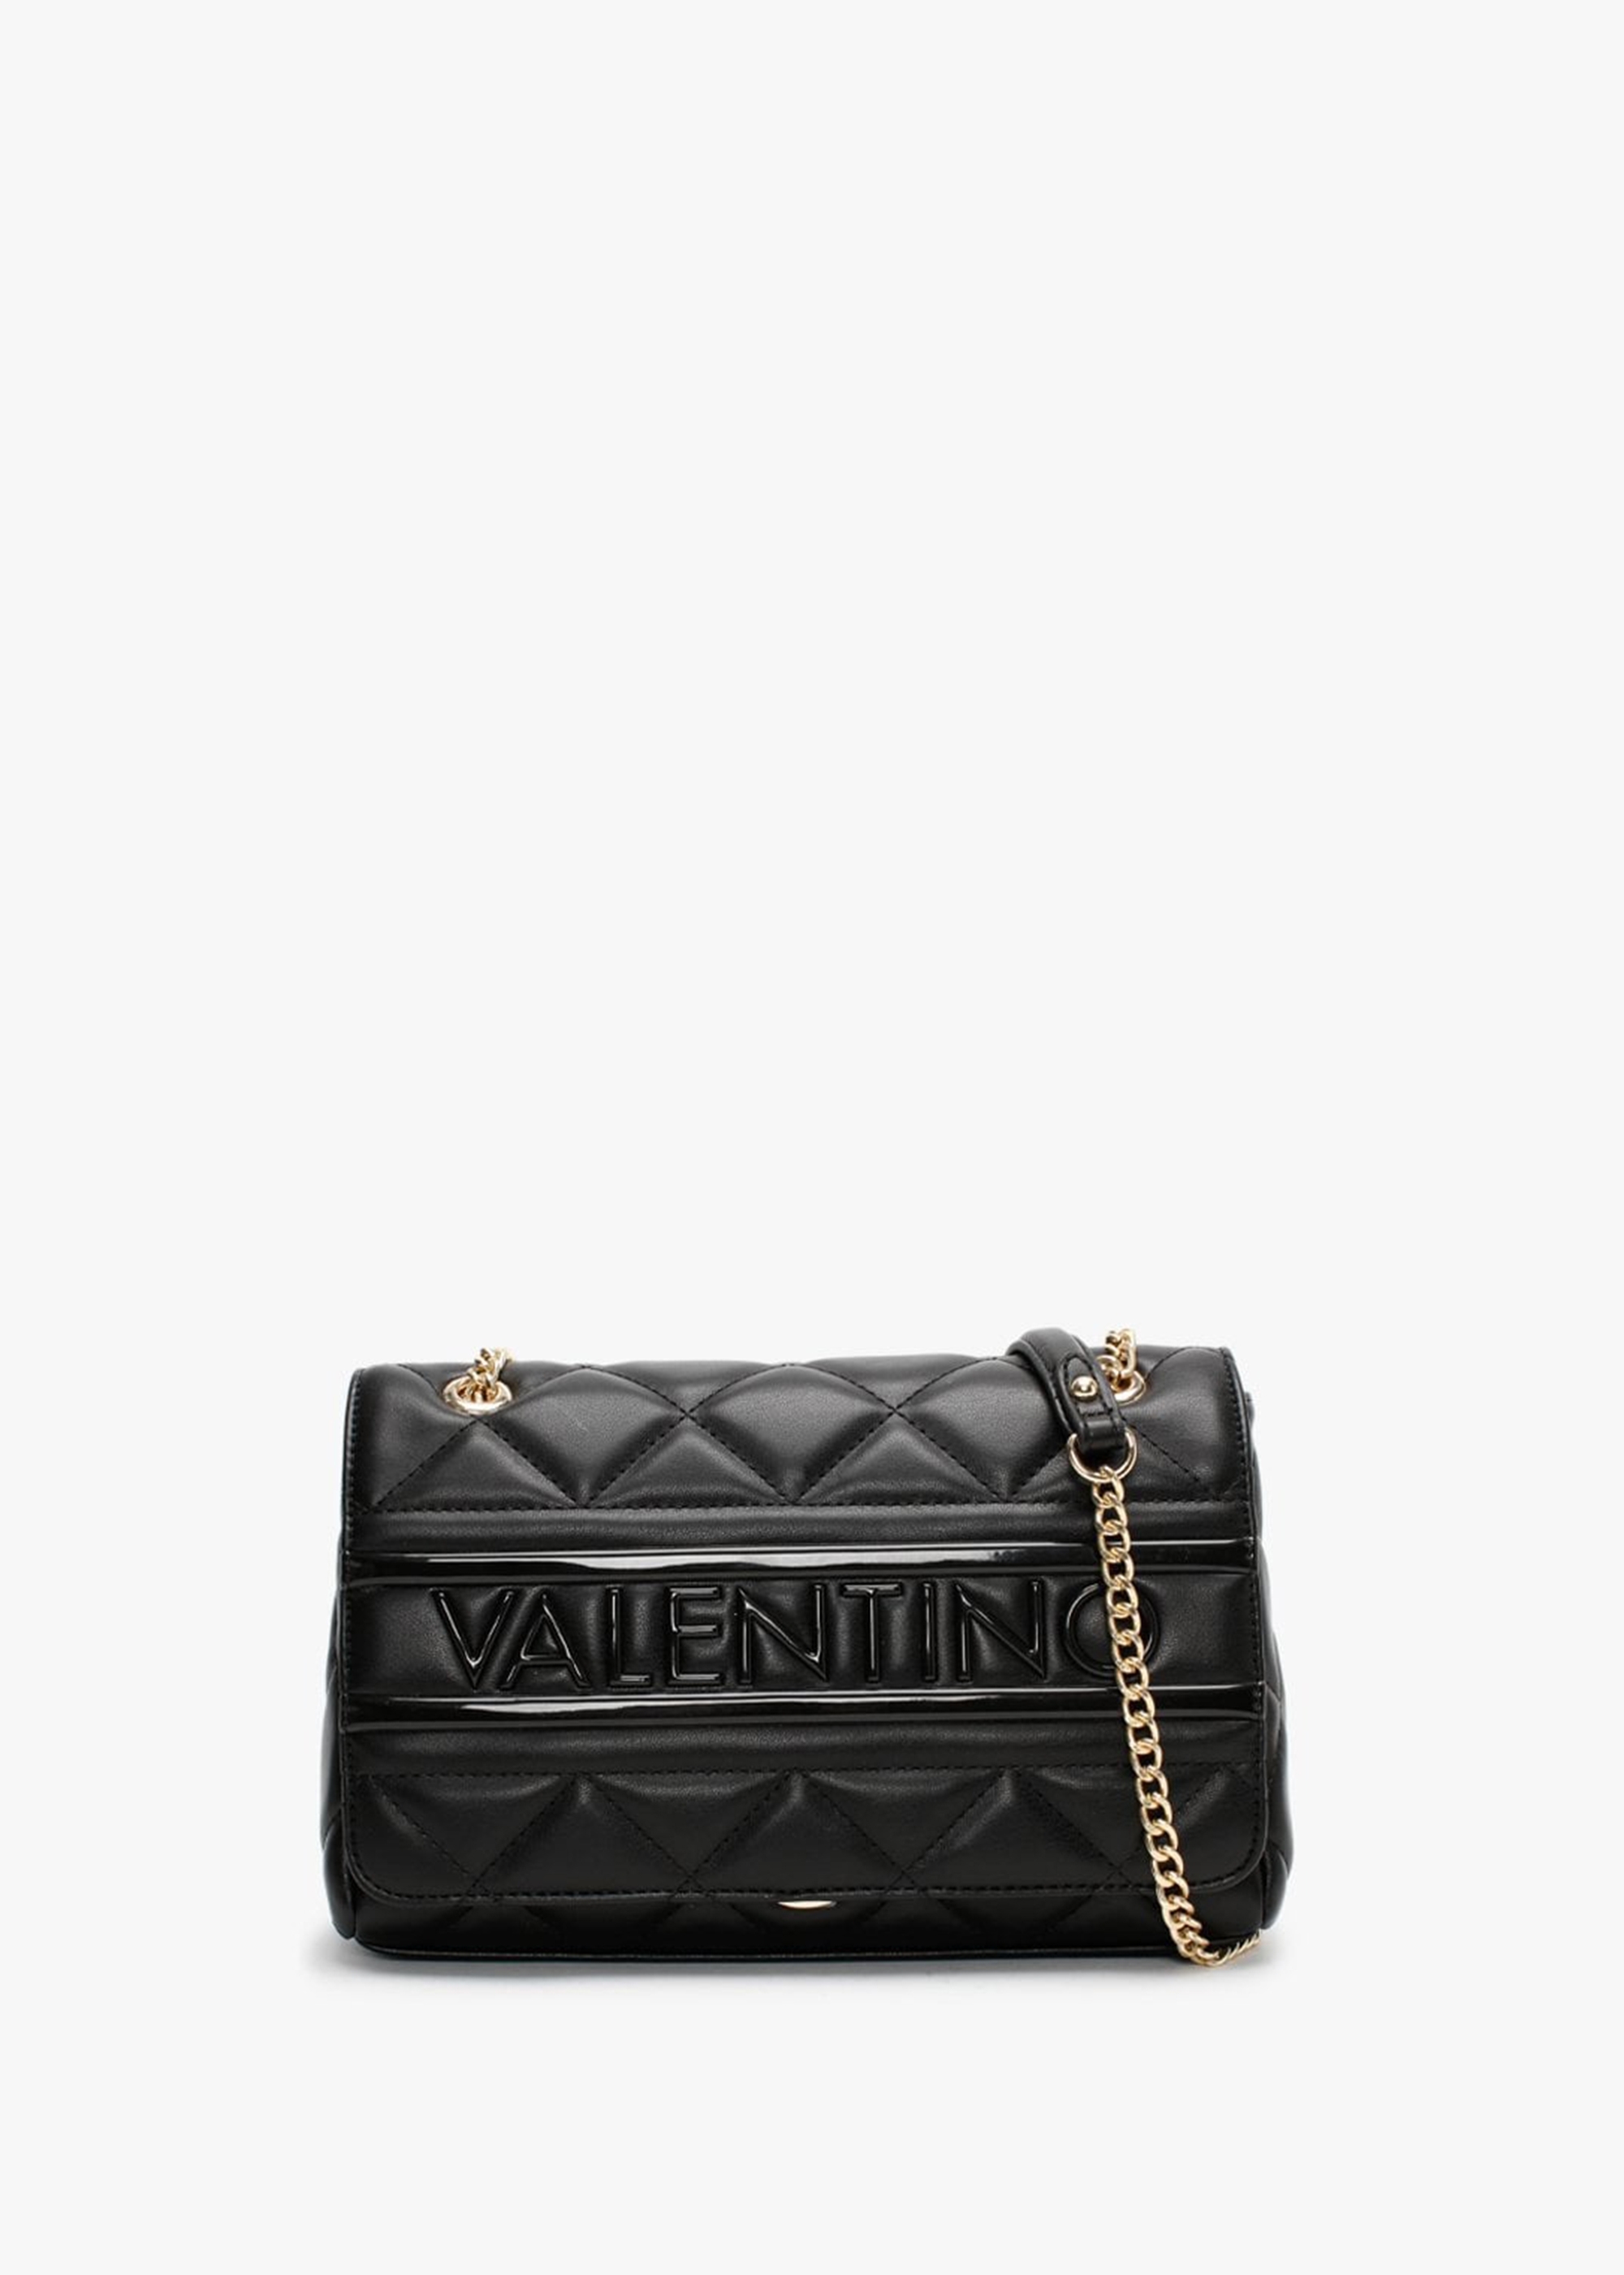 Valentino Ada Black Quilted Satchel Bag